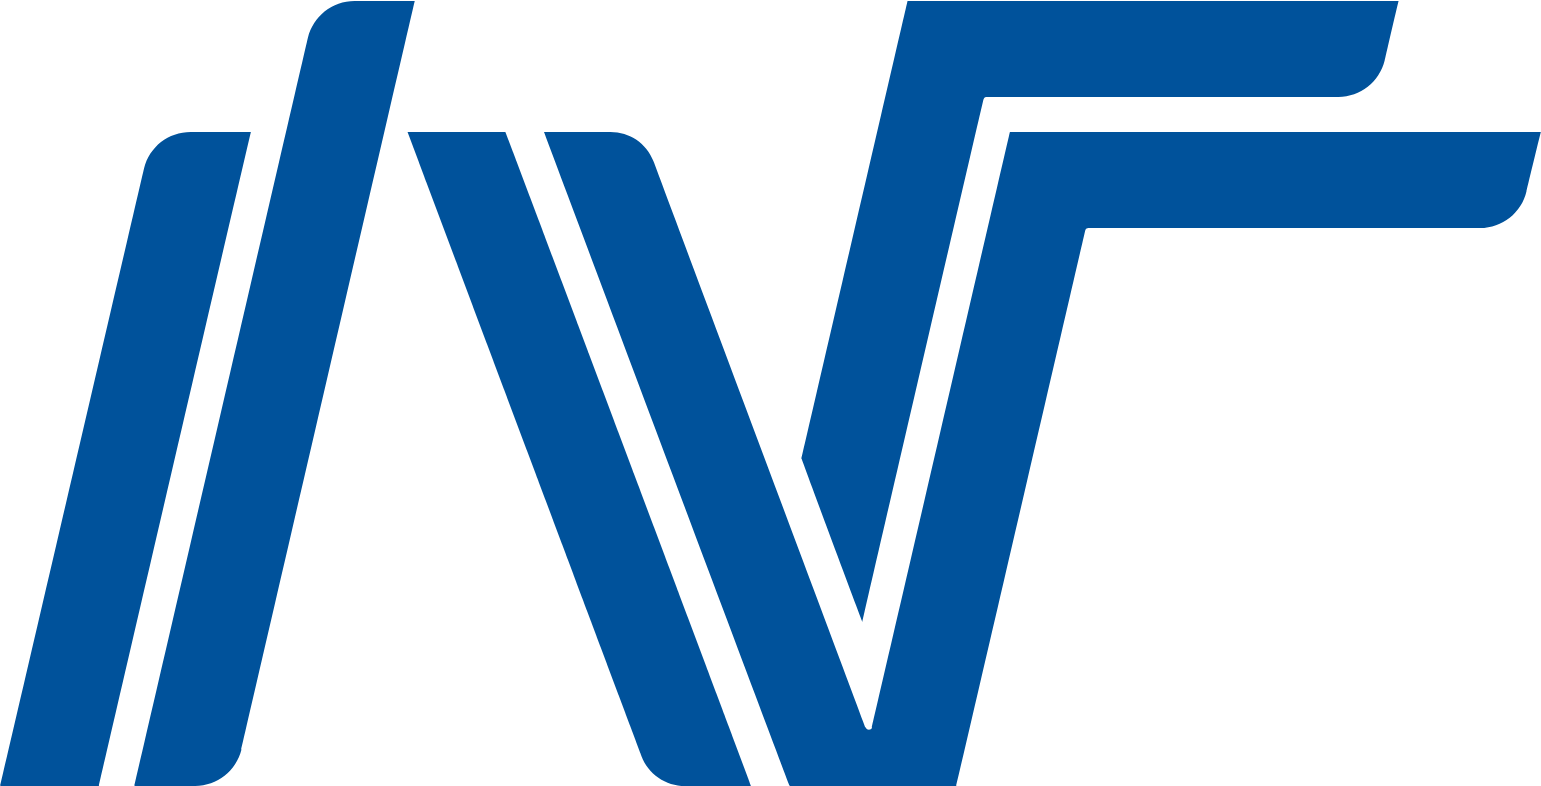 Industrivarden logo (PNG transparent)